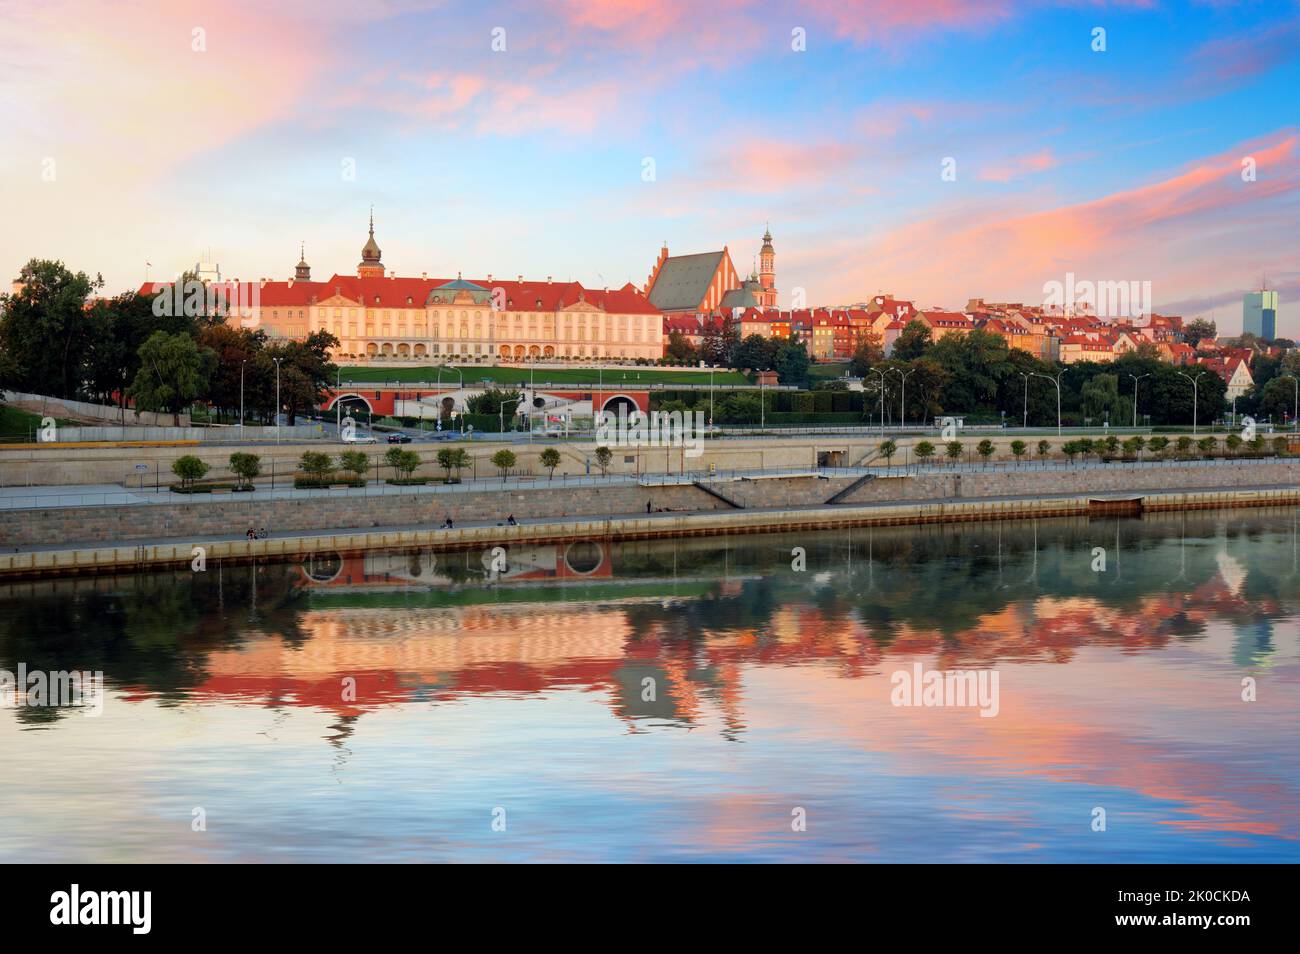 Royal Castle over the Vistula river in Warsaw, Poland Stock Photo